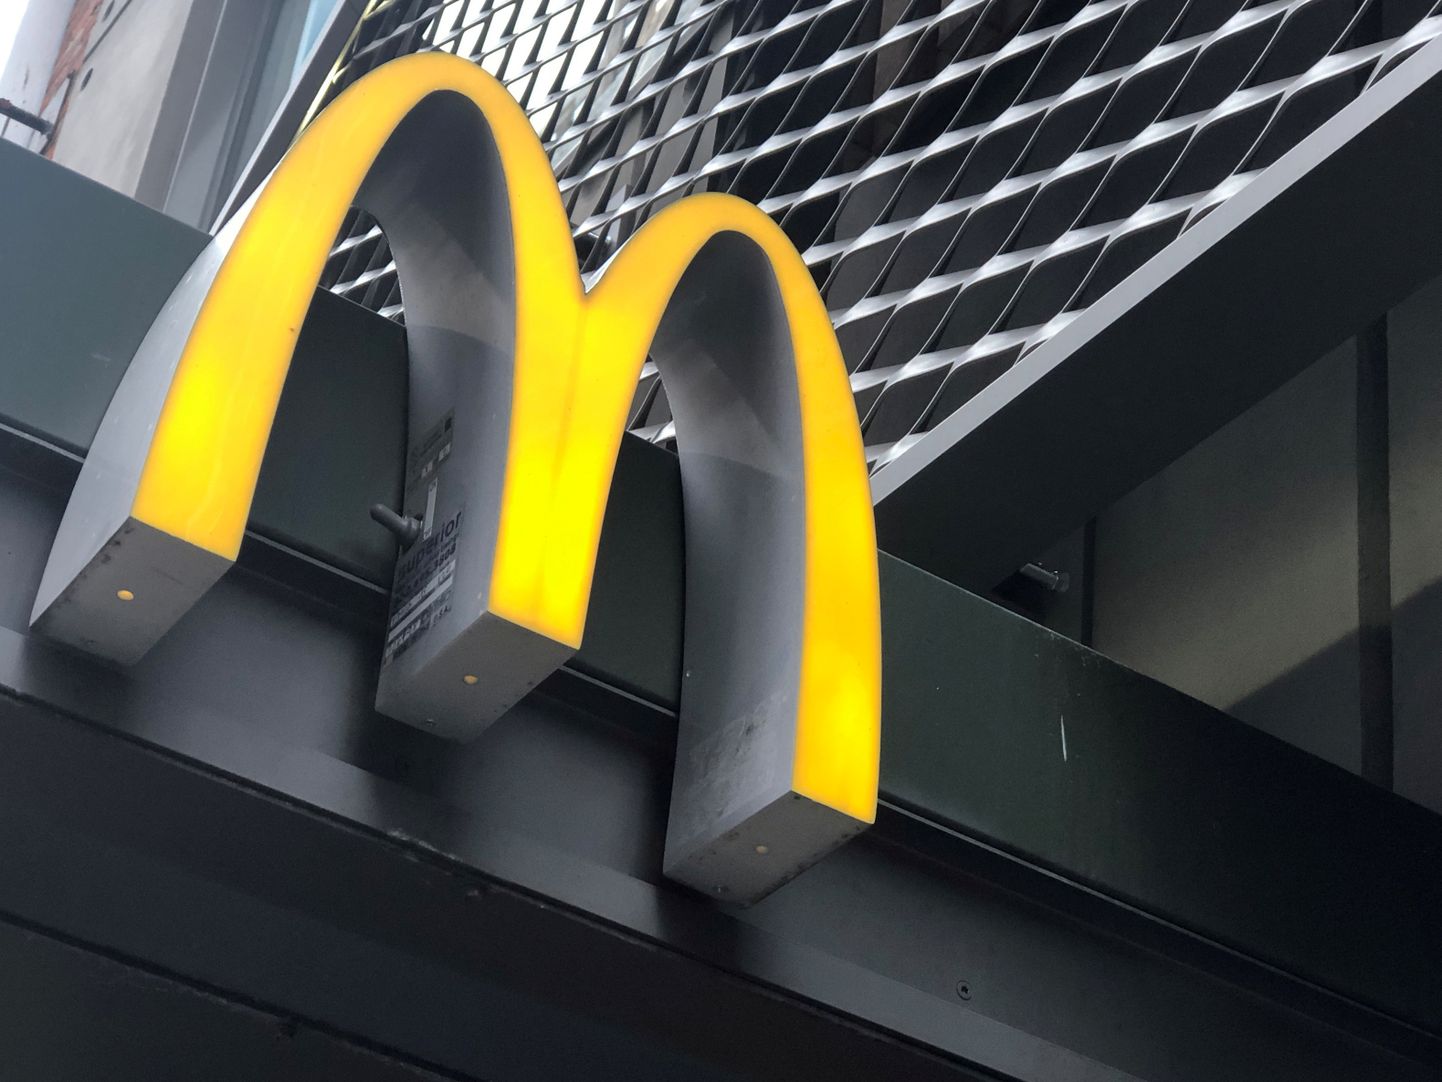 McDonald'si logo